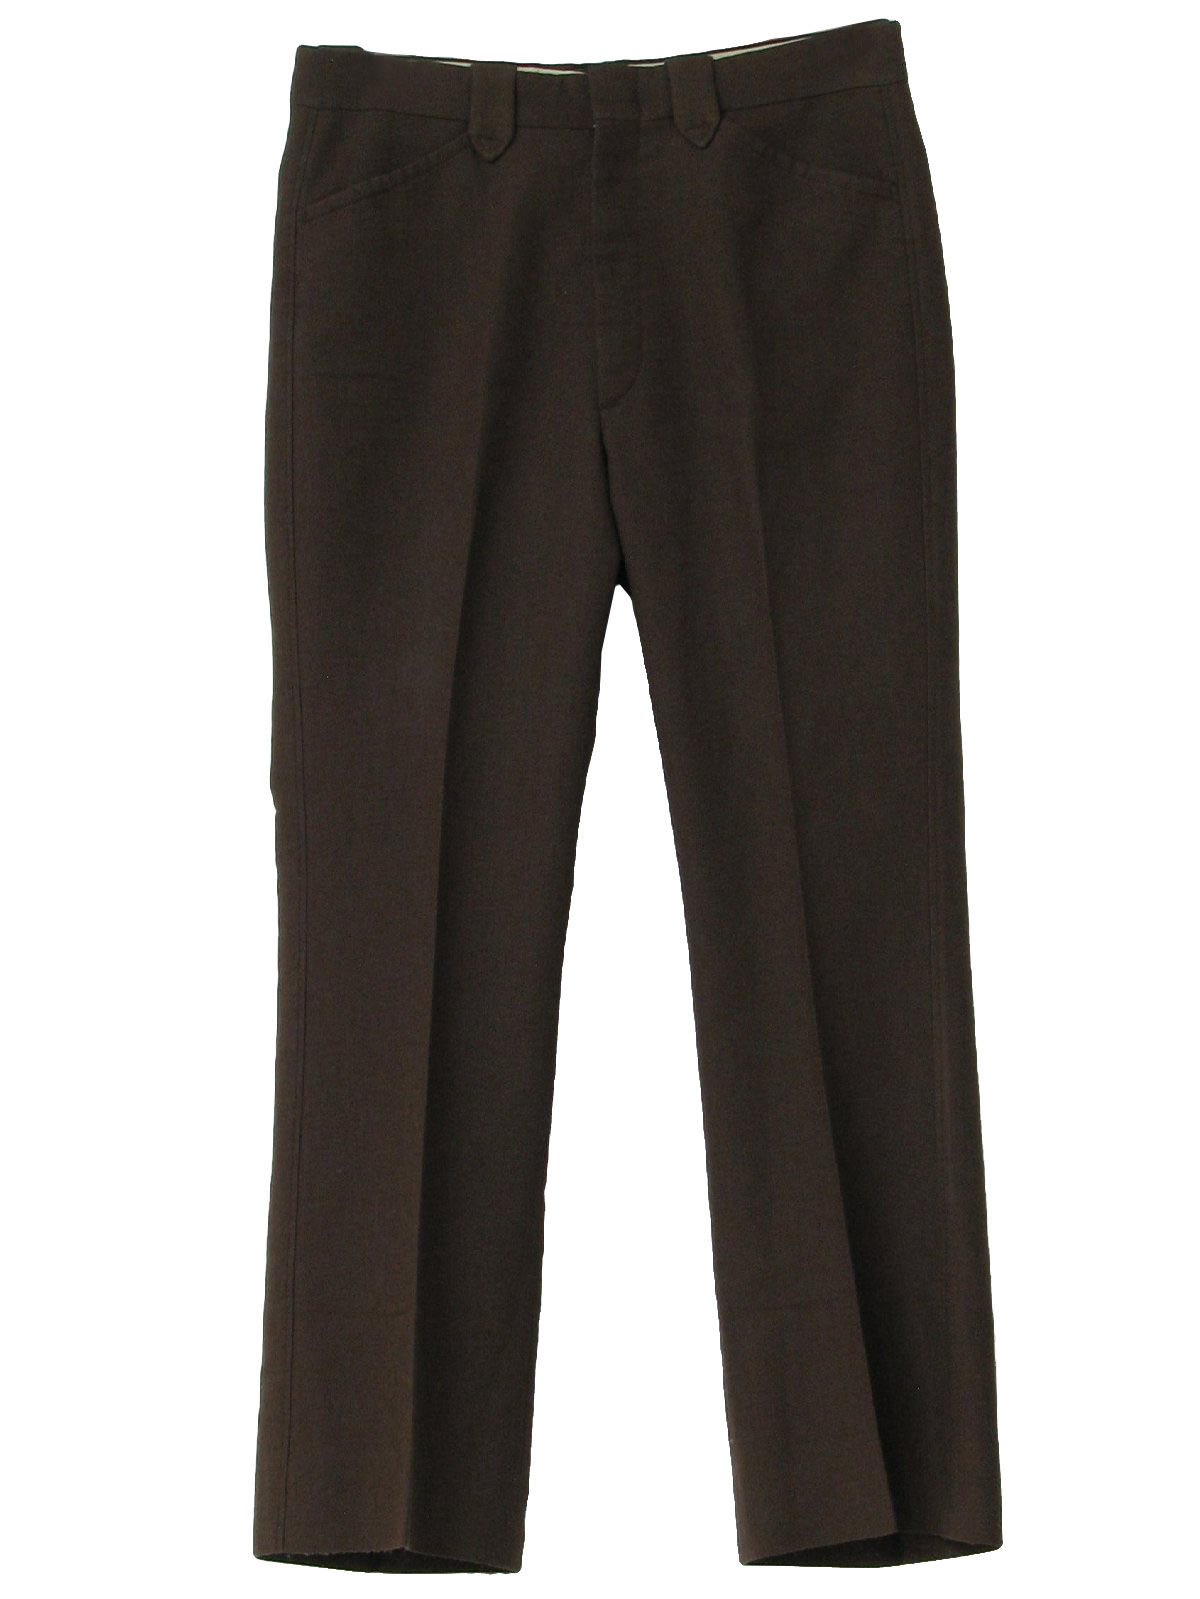 Retro 1970's Pants (Farah) : 70s -Farah- Mens medium brown polyester ...